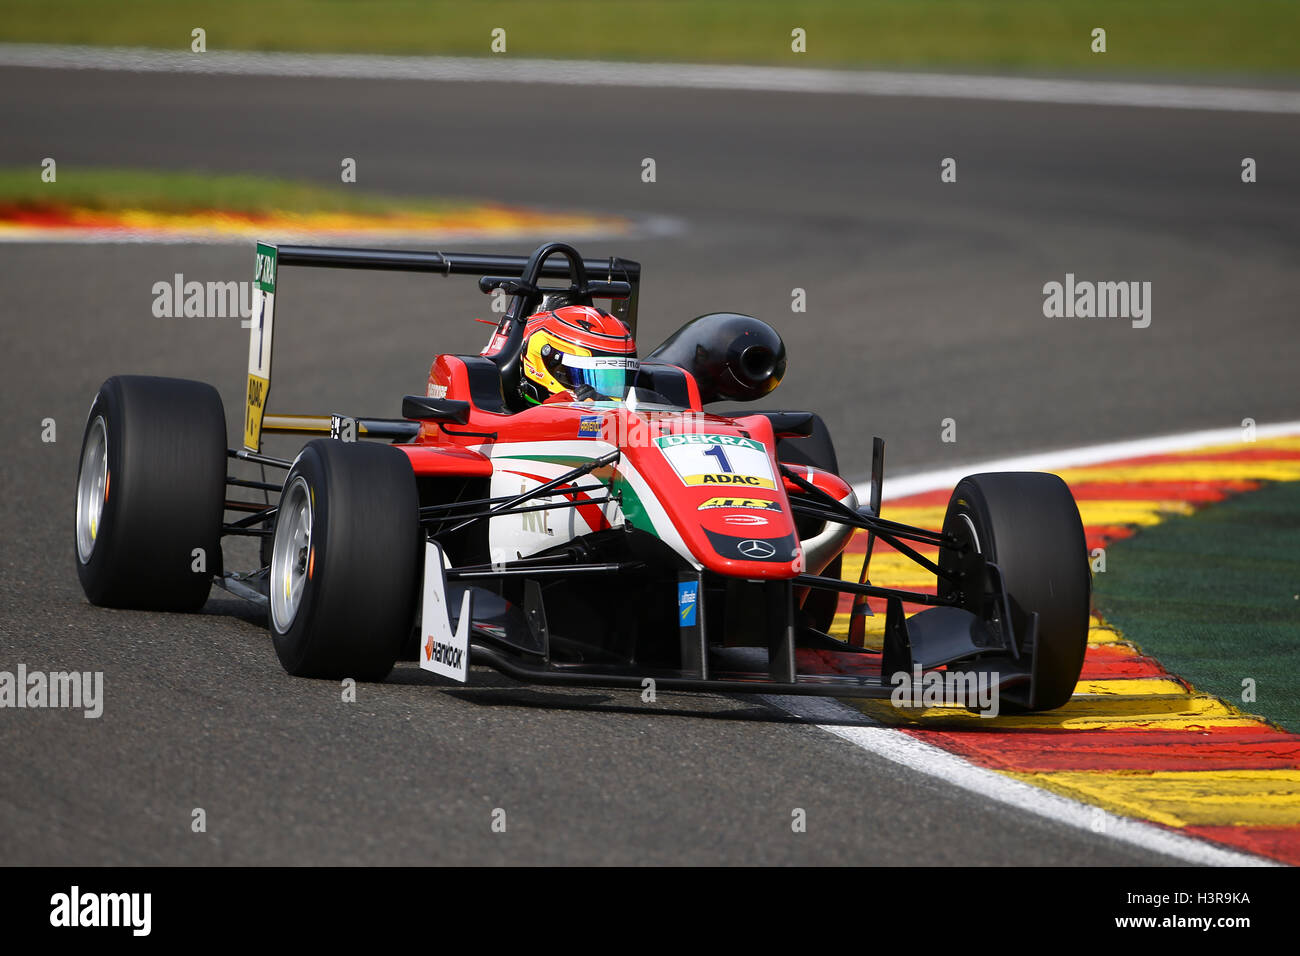 Lance paseo (CAN), Prema Powerteam, campeón de F3 FIA 2016 Foto de stock